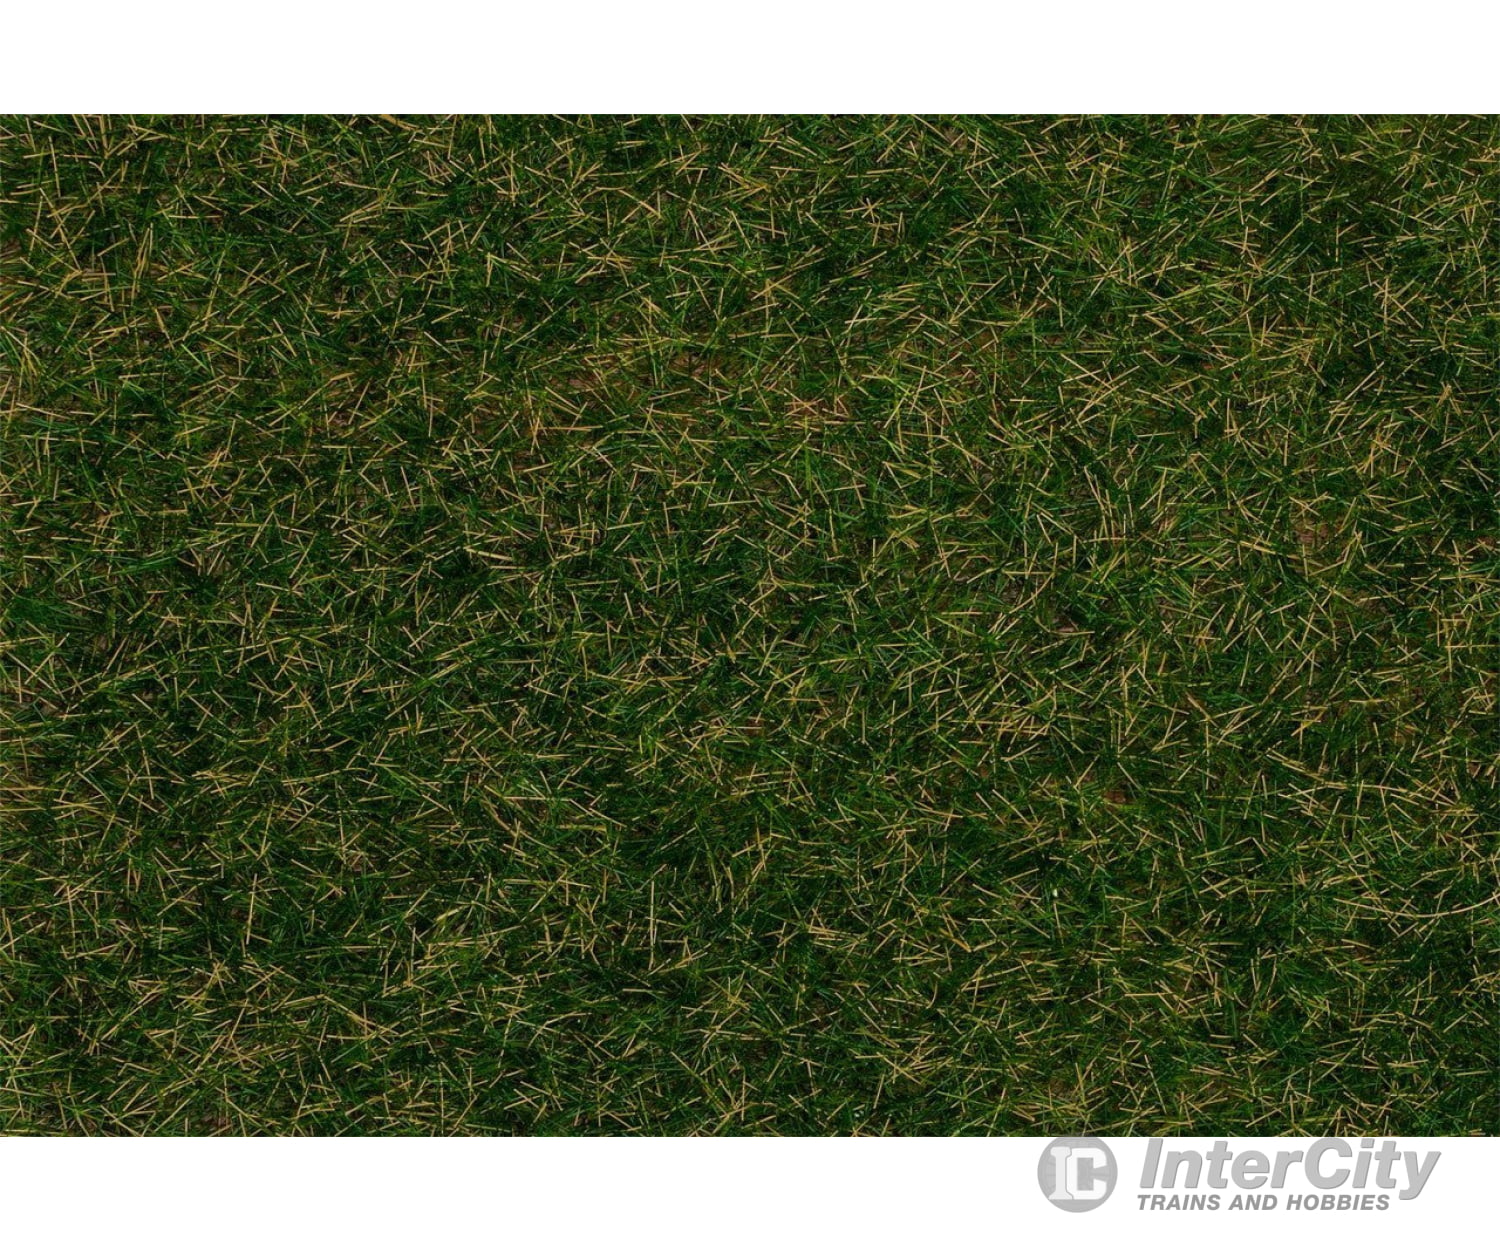 Faller 170258 Ho Tt N Wild Grass Ground Cover Fibres Dark Green 4 Mm 1 Kg Static Grass & Applicators